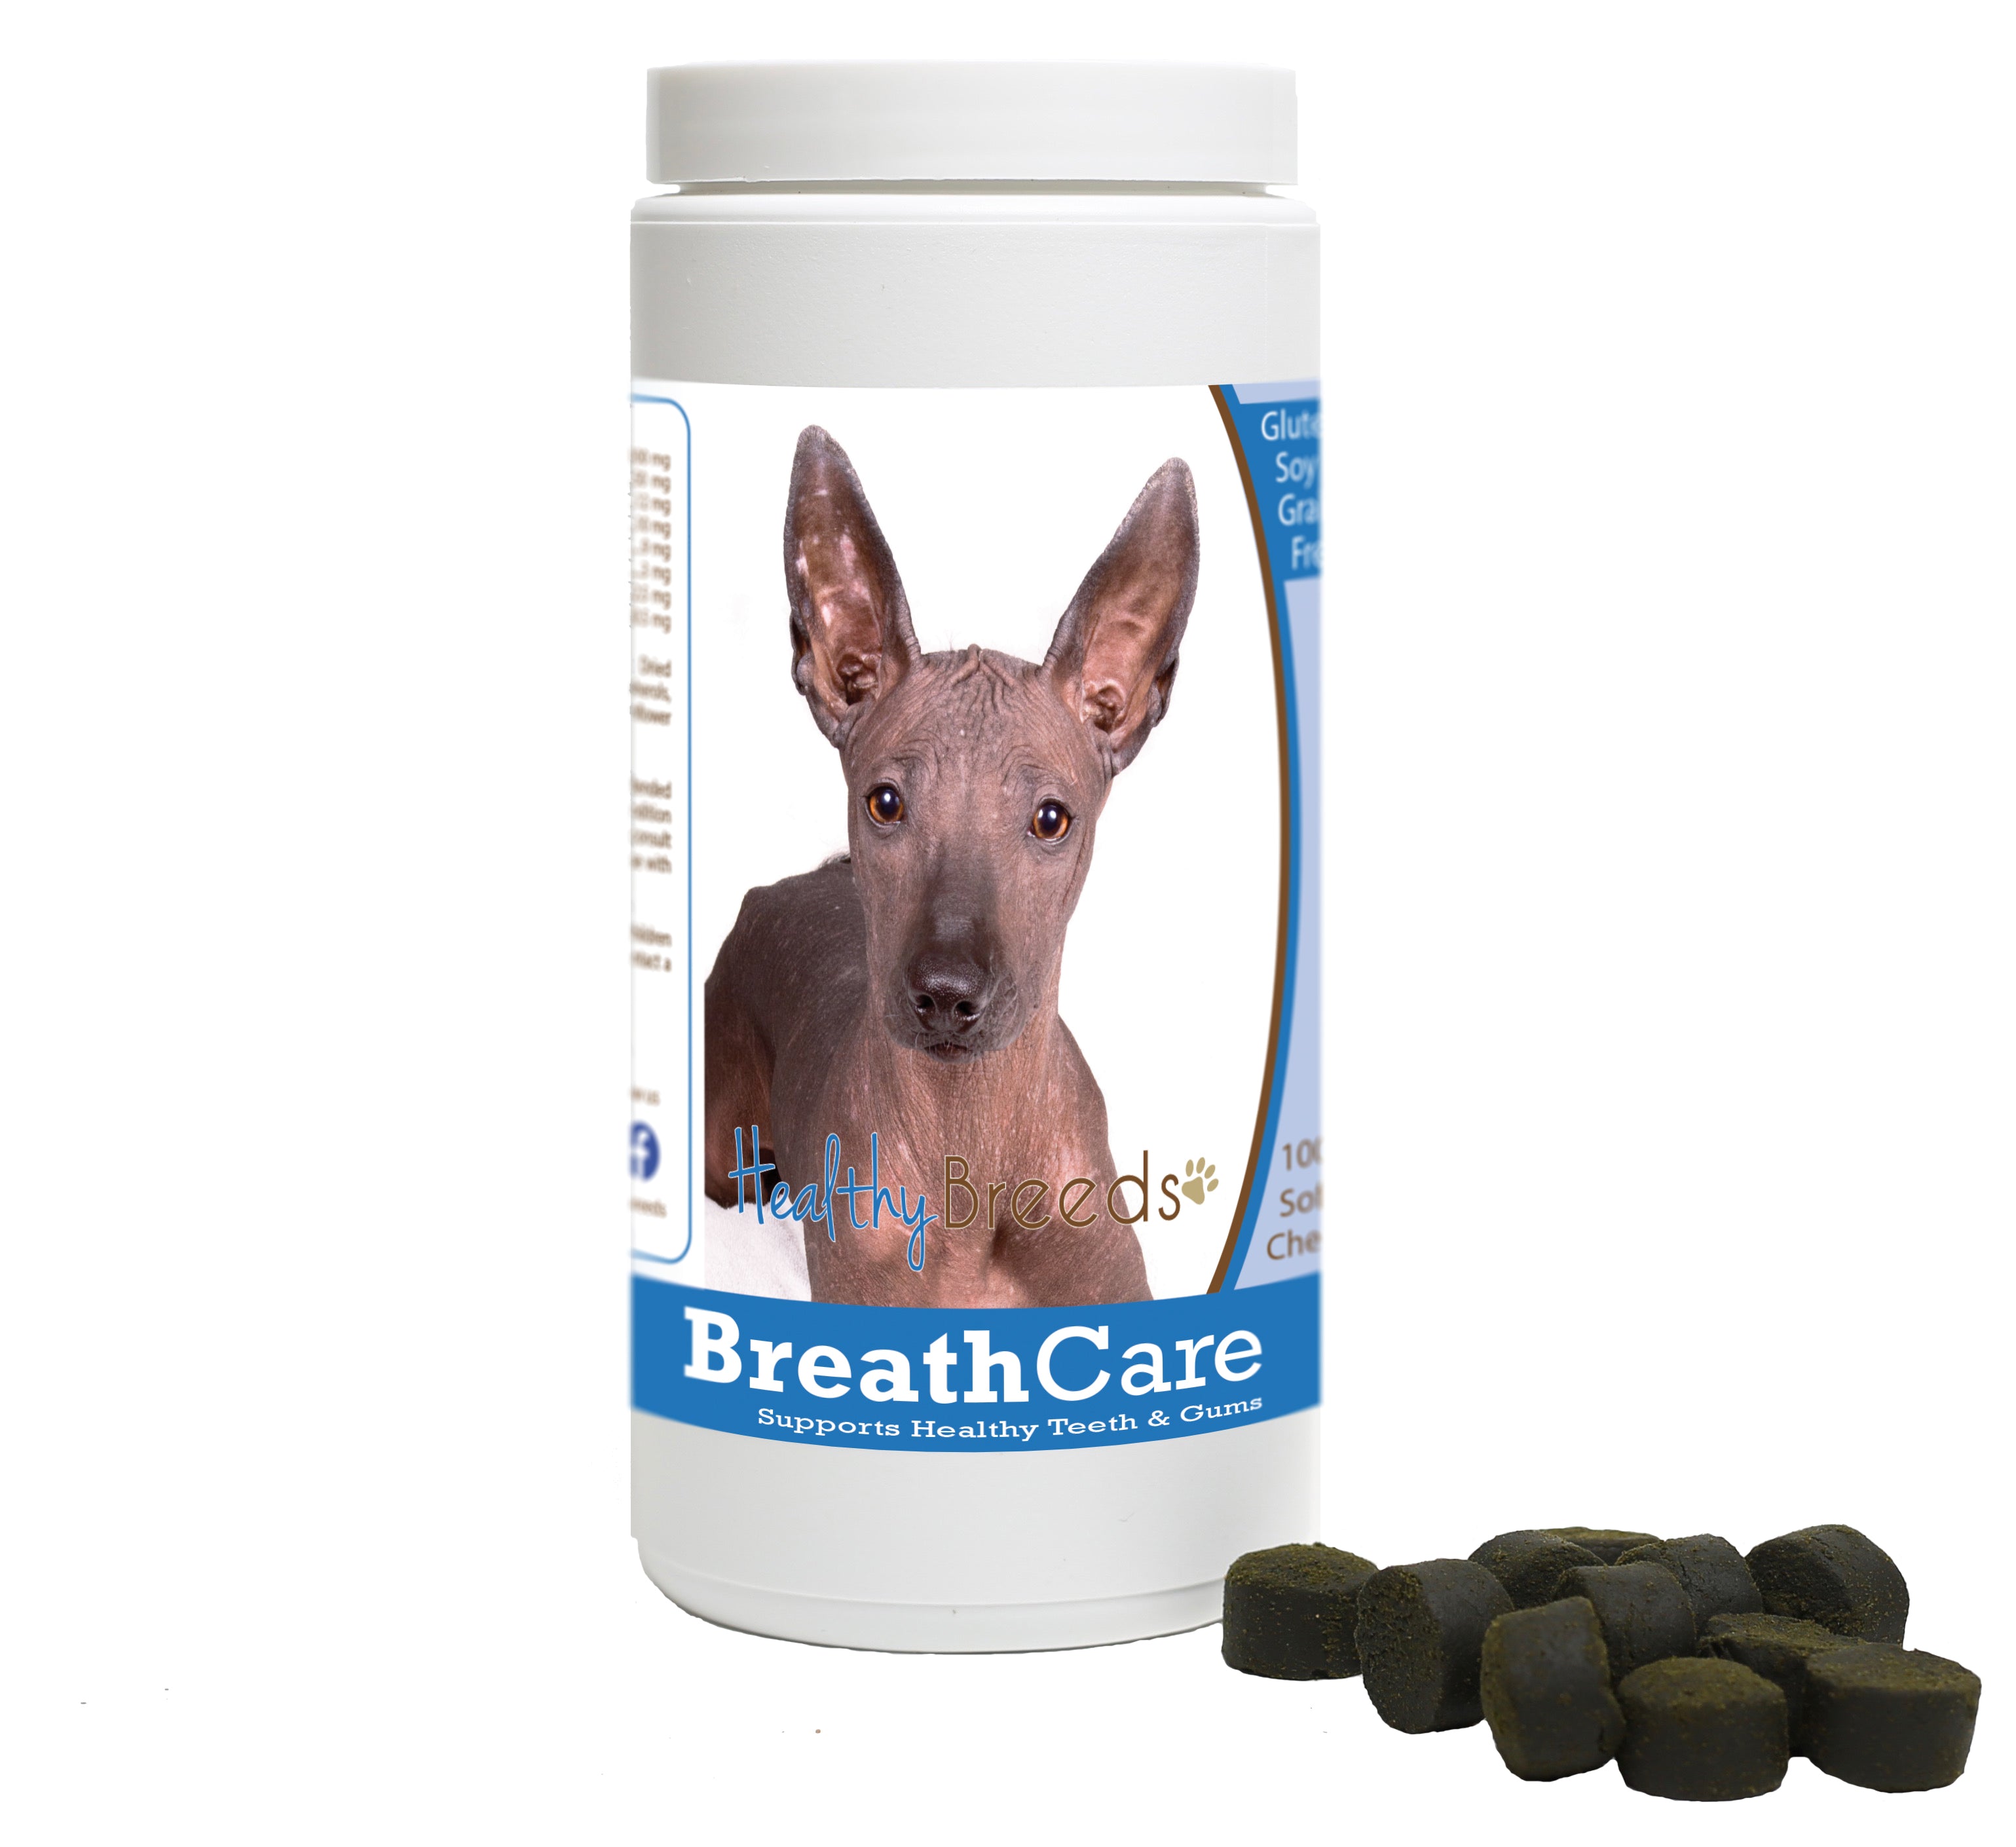 Xoloitzcuintli Breath Care Soft Chews for Dogs 100 Count